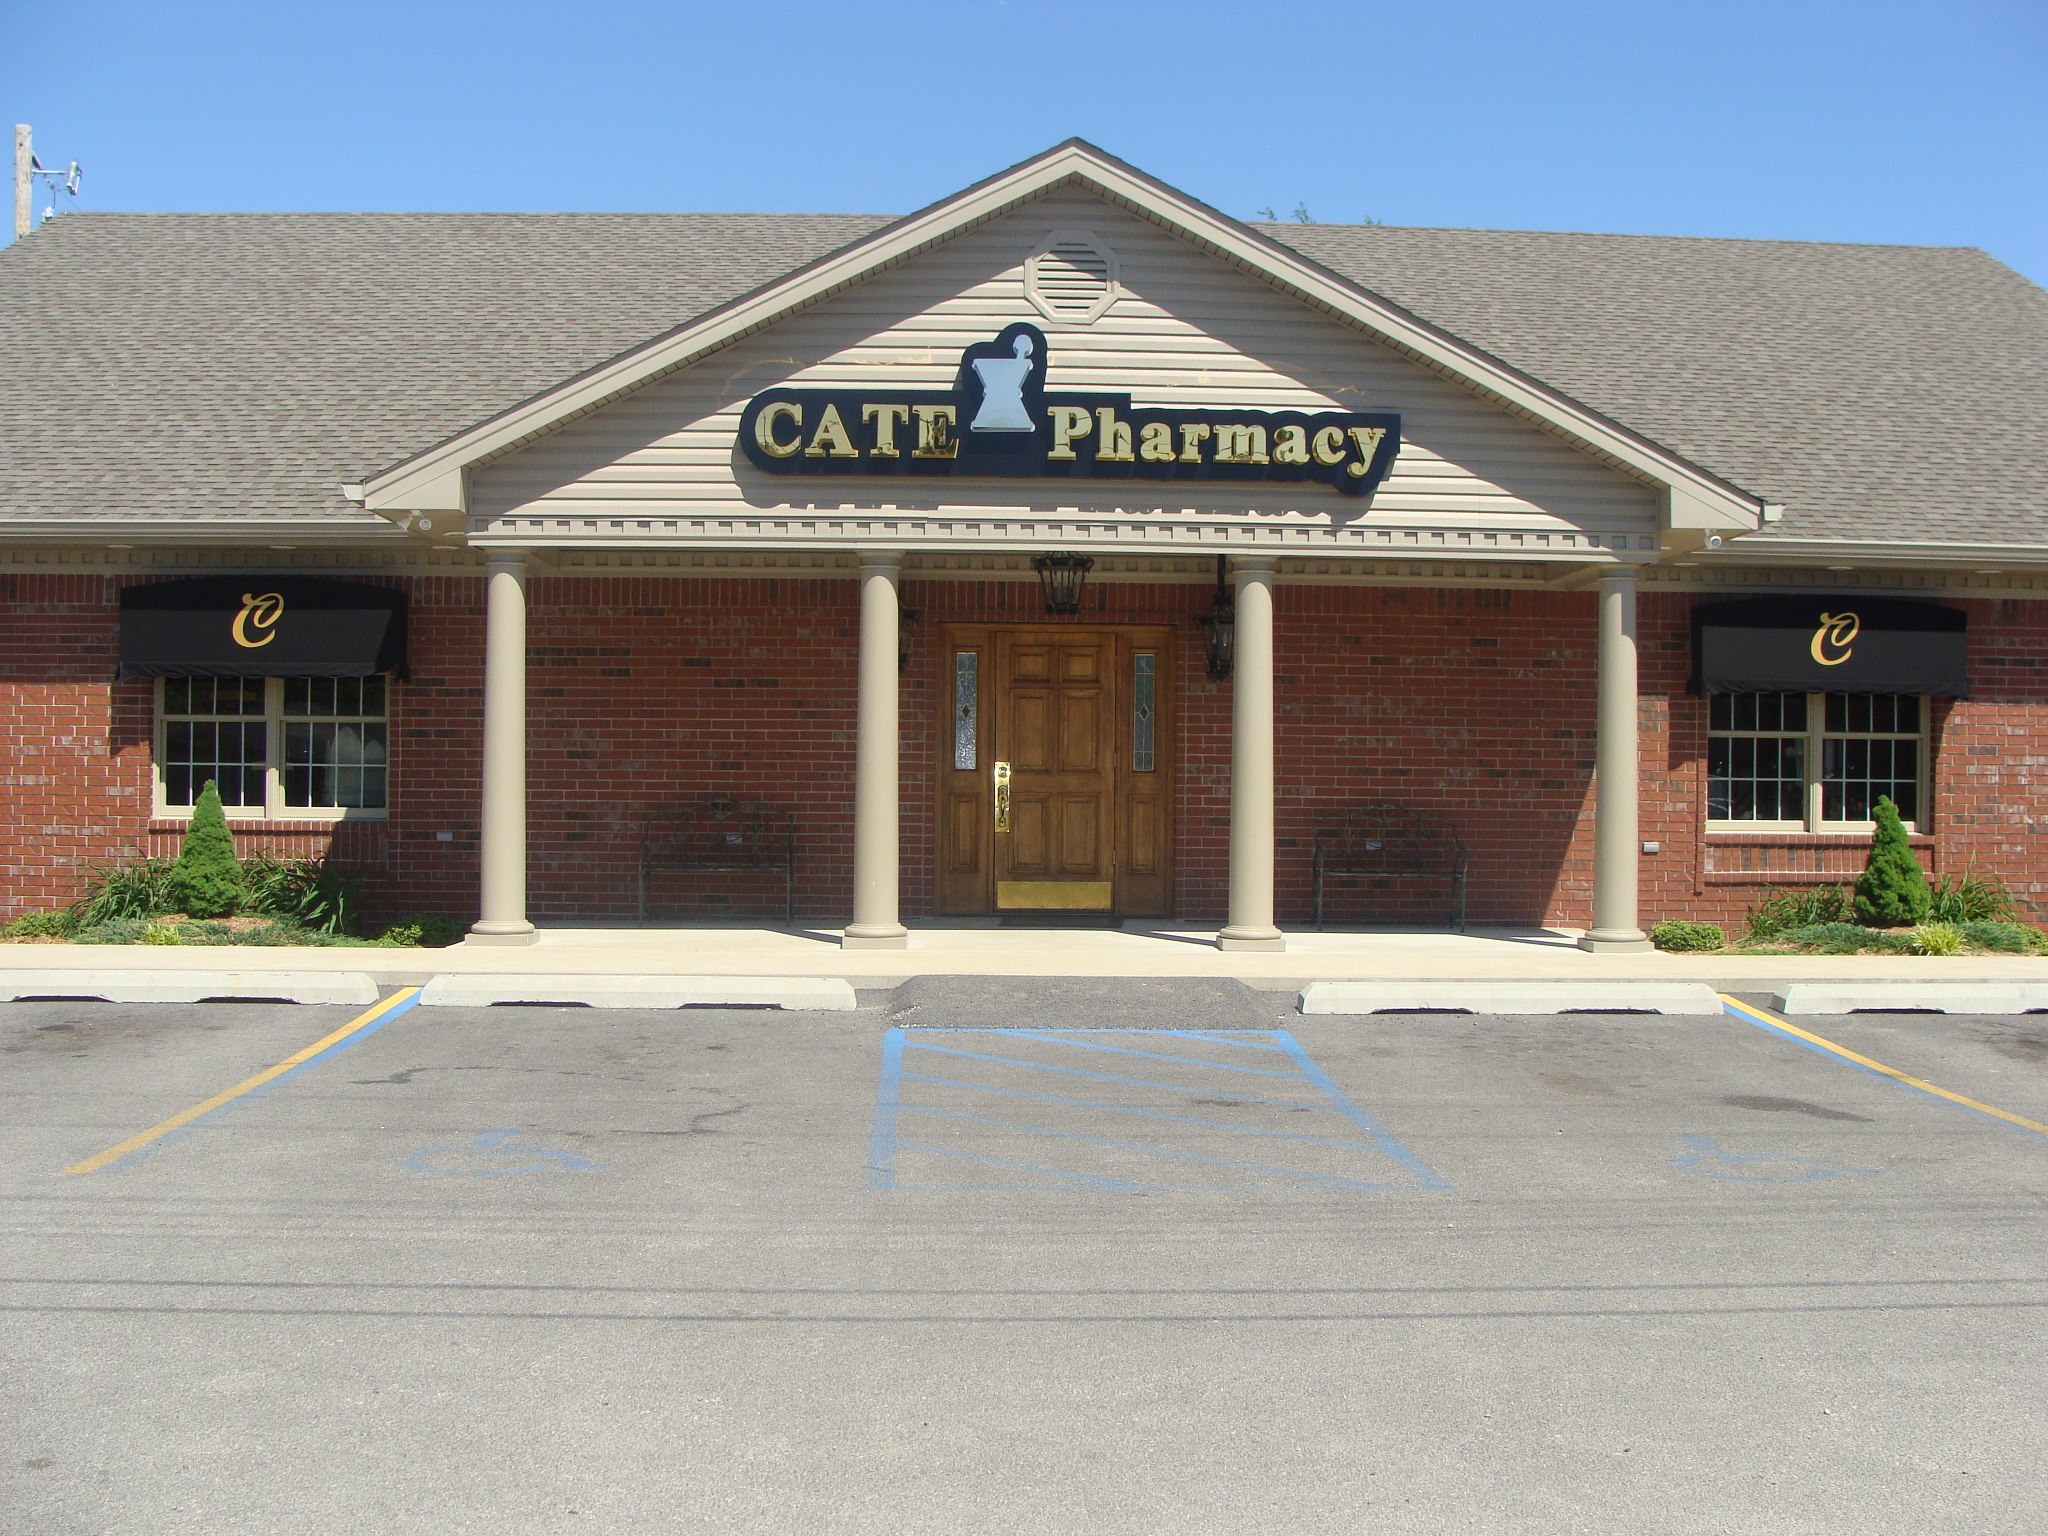 Cate Pharmacy, Inc.